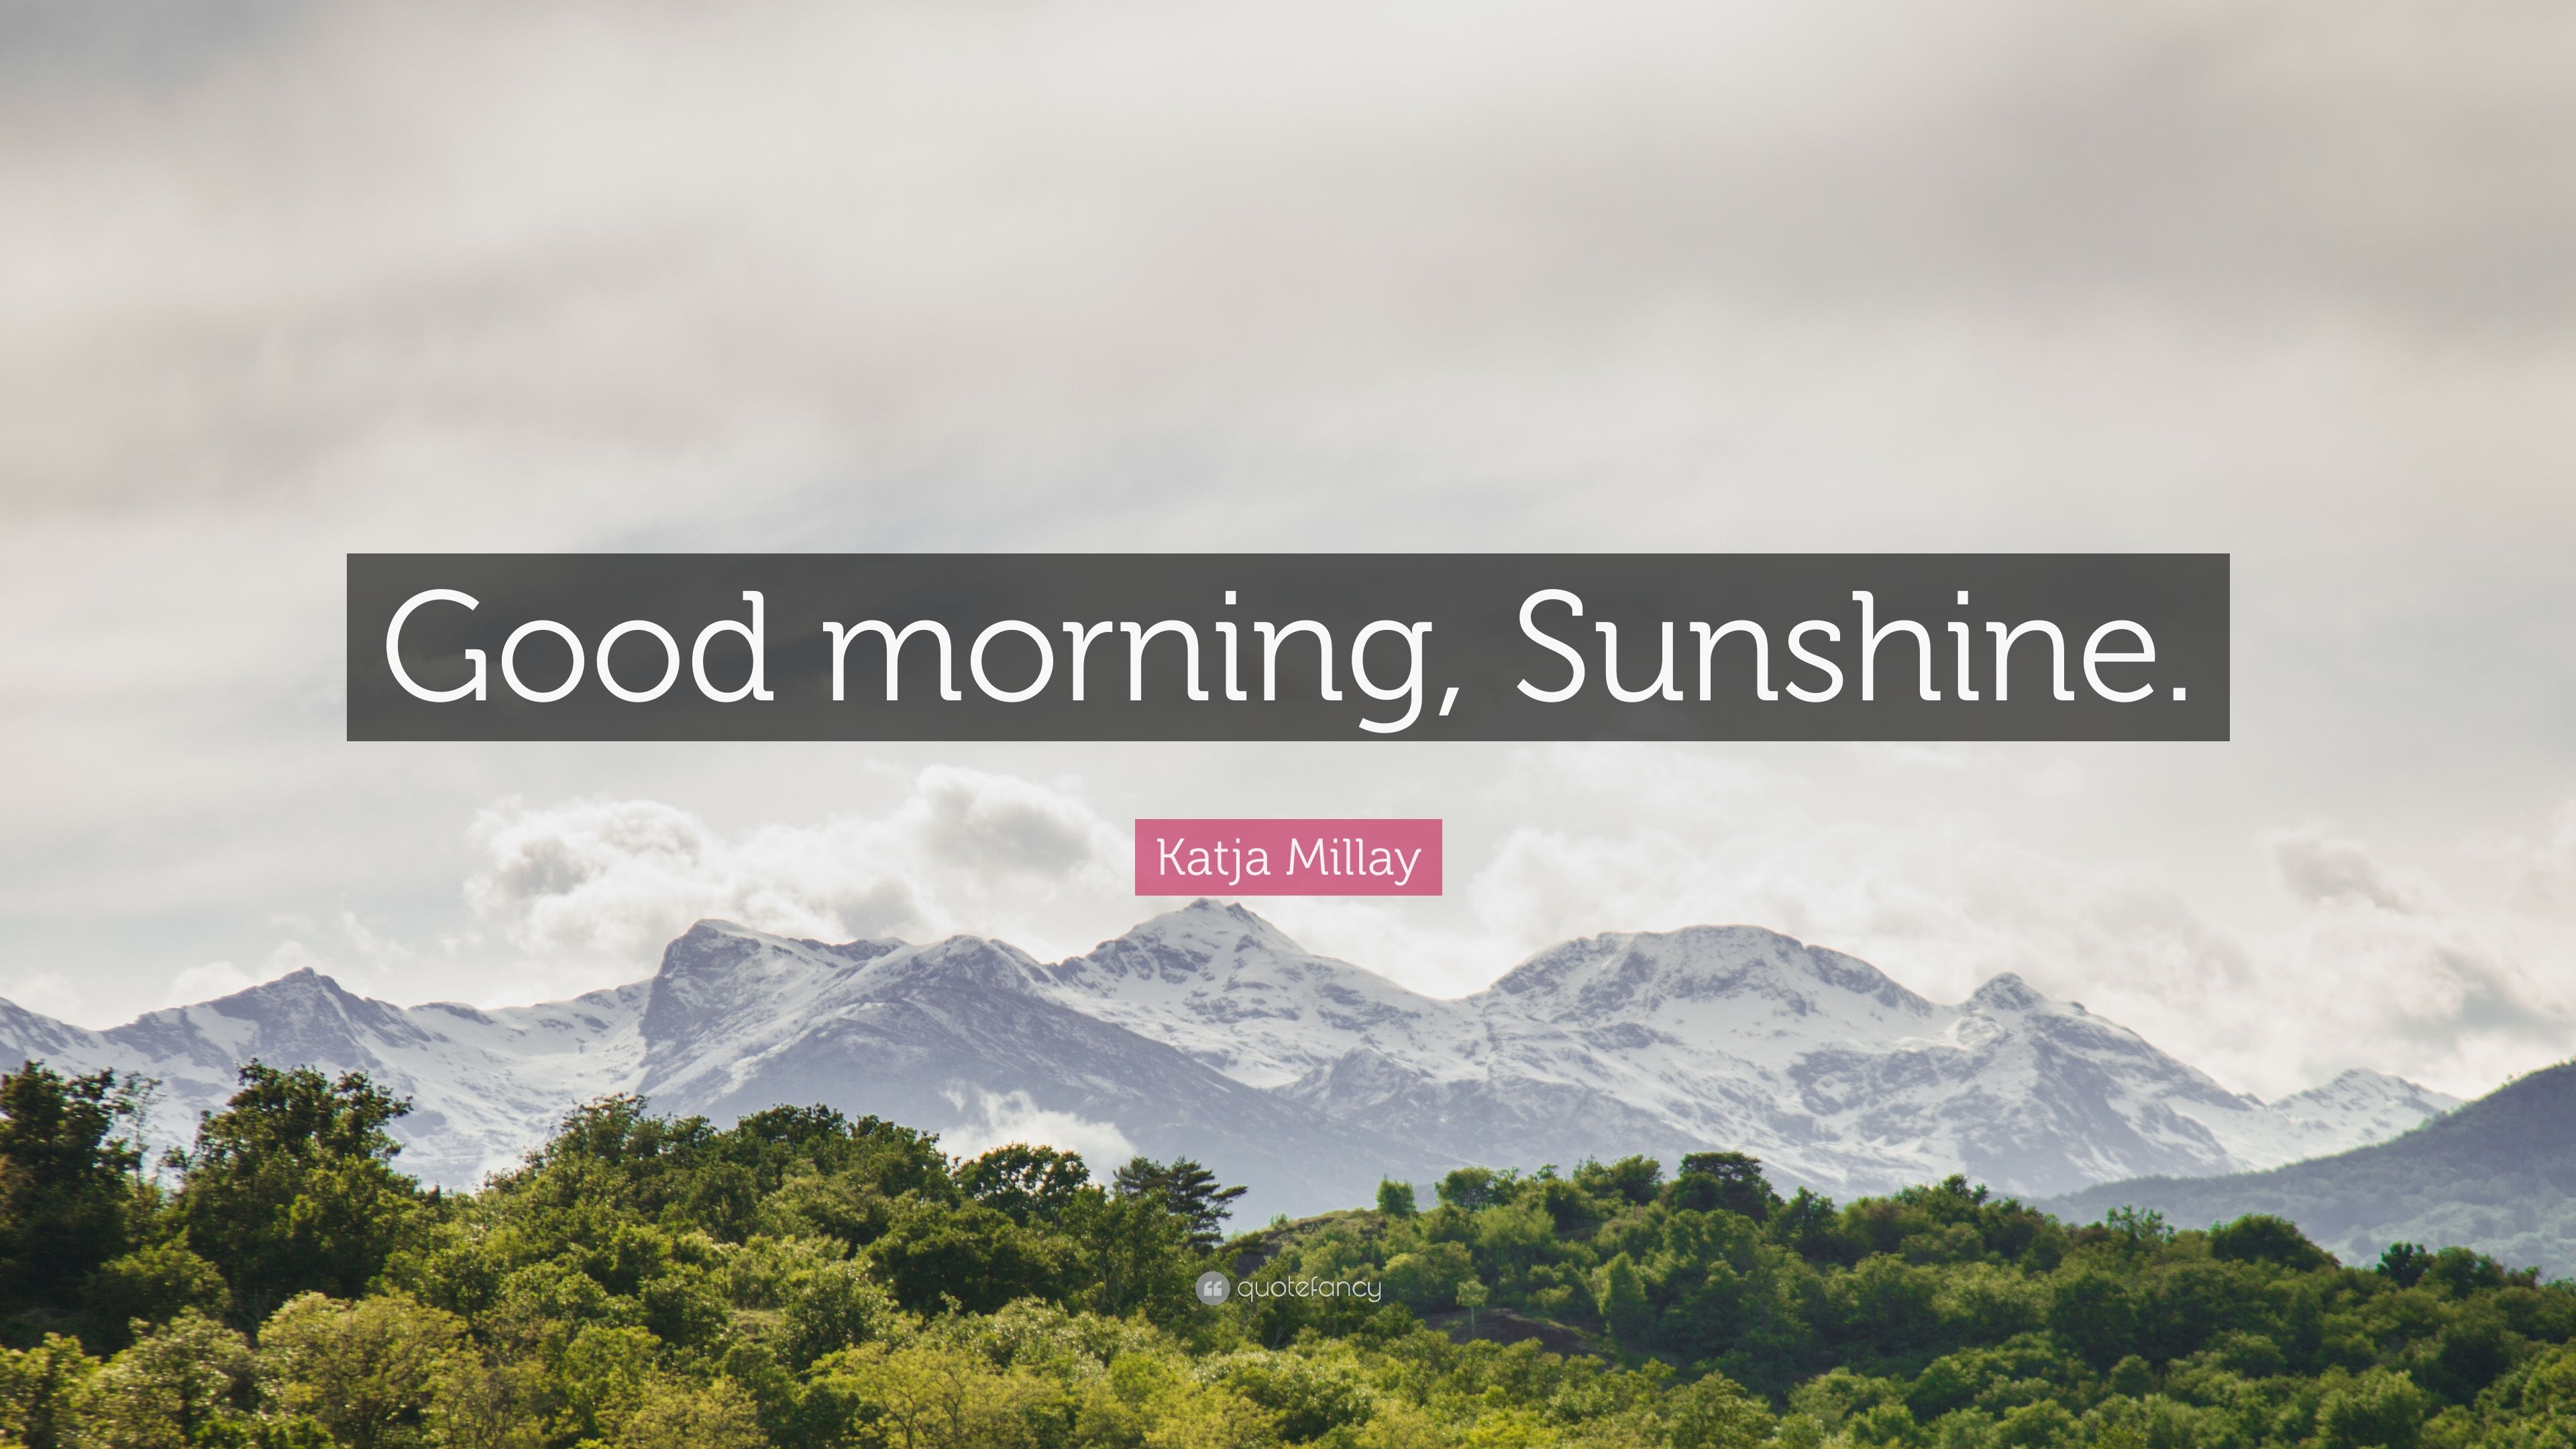 Katja Millay Quote: “Good morning, Sunshine.” 10 wallpaper